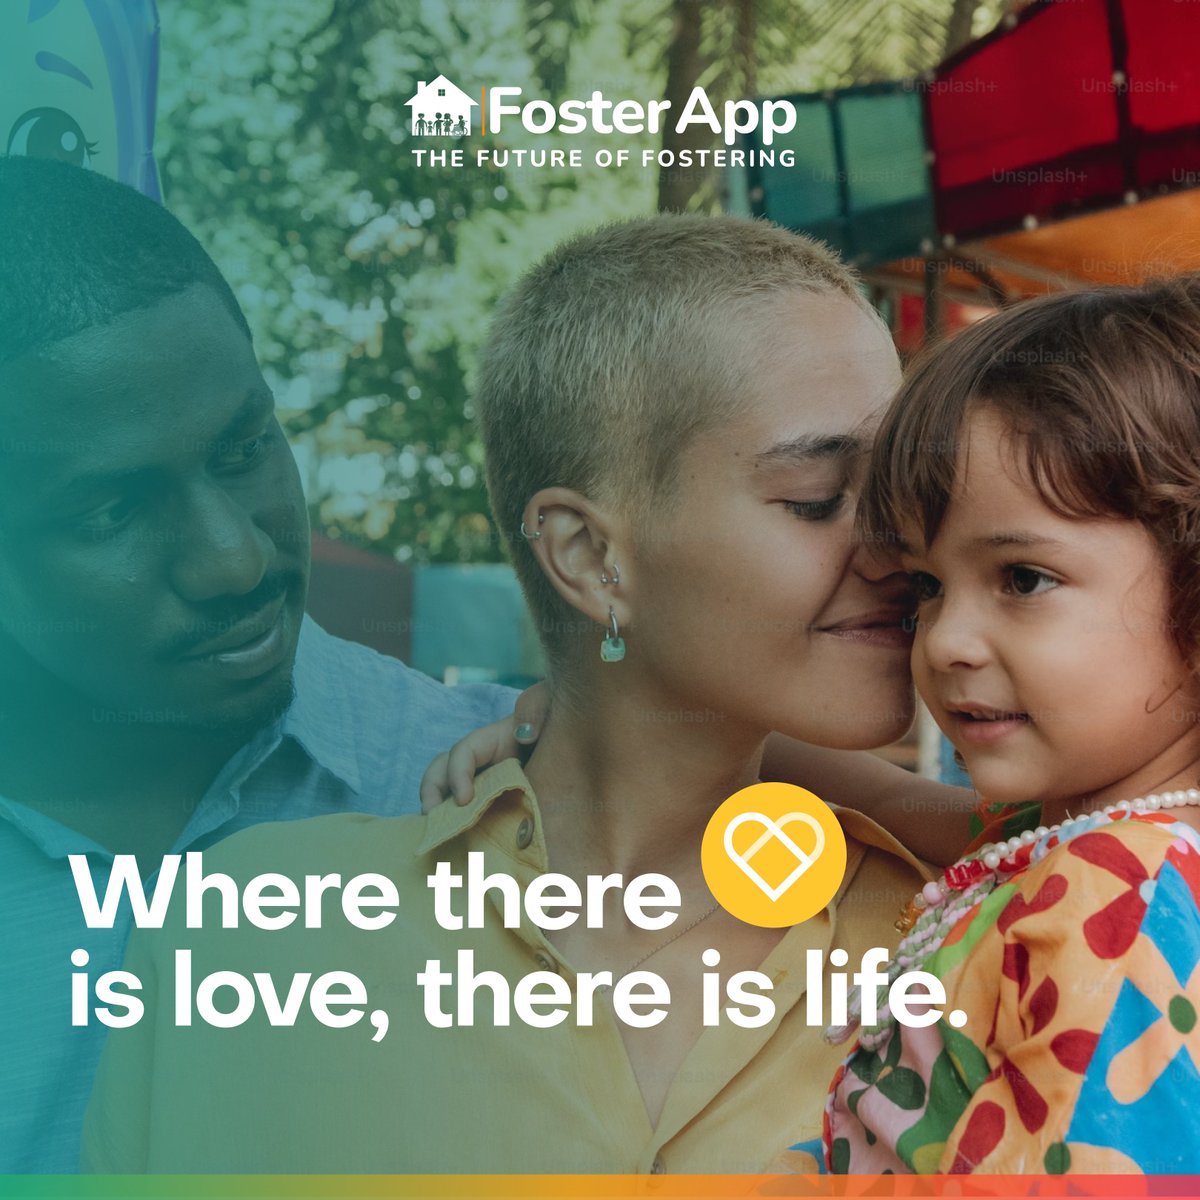 Where there is love, there is life

#fosterapp #foster #FosterAppKids #HopeAndLove #DreamsComeTrue #childcare #future #care #rescue #love #family